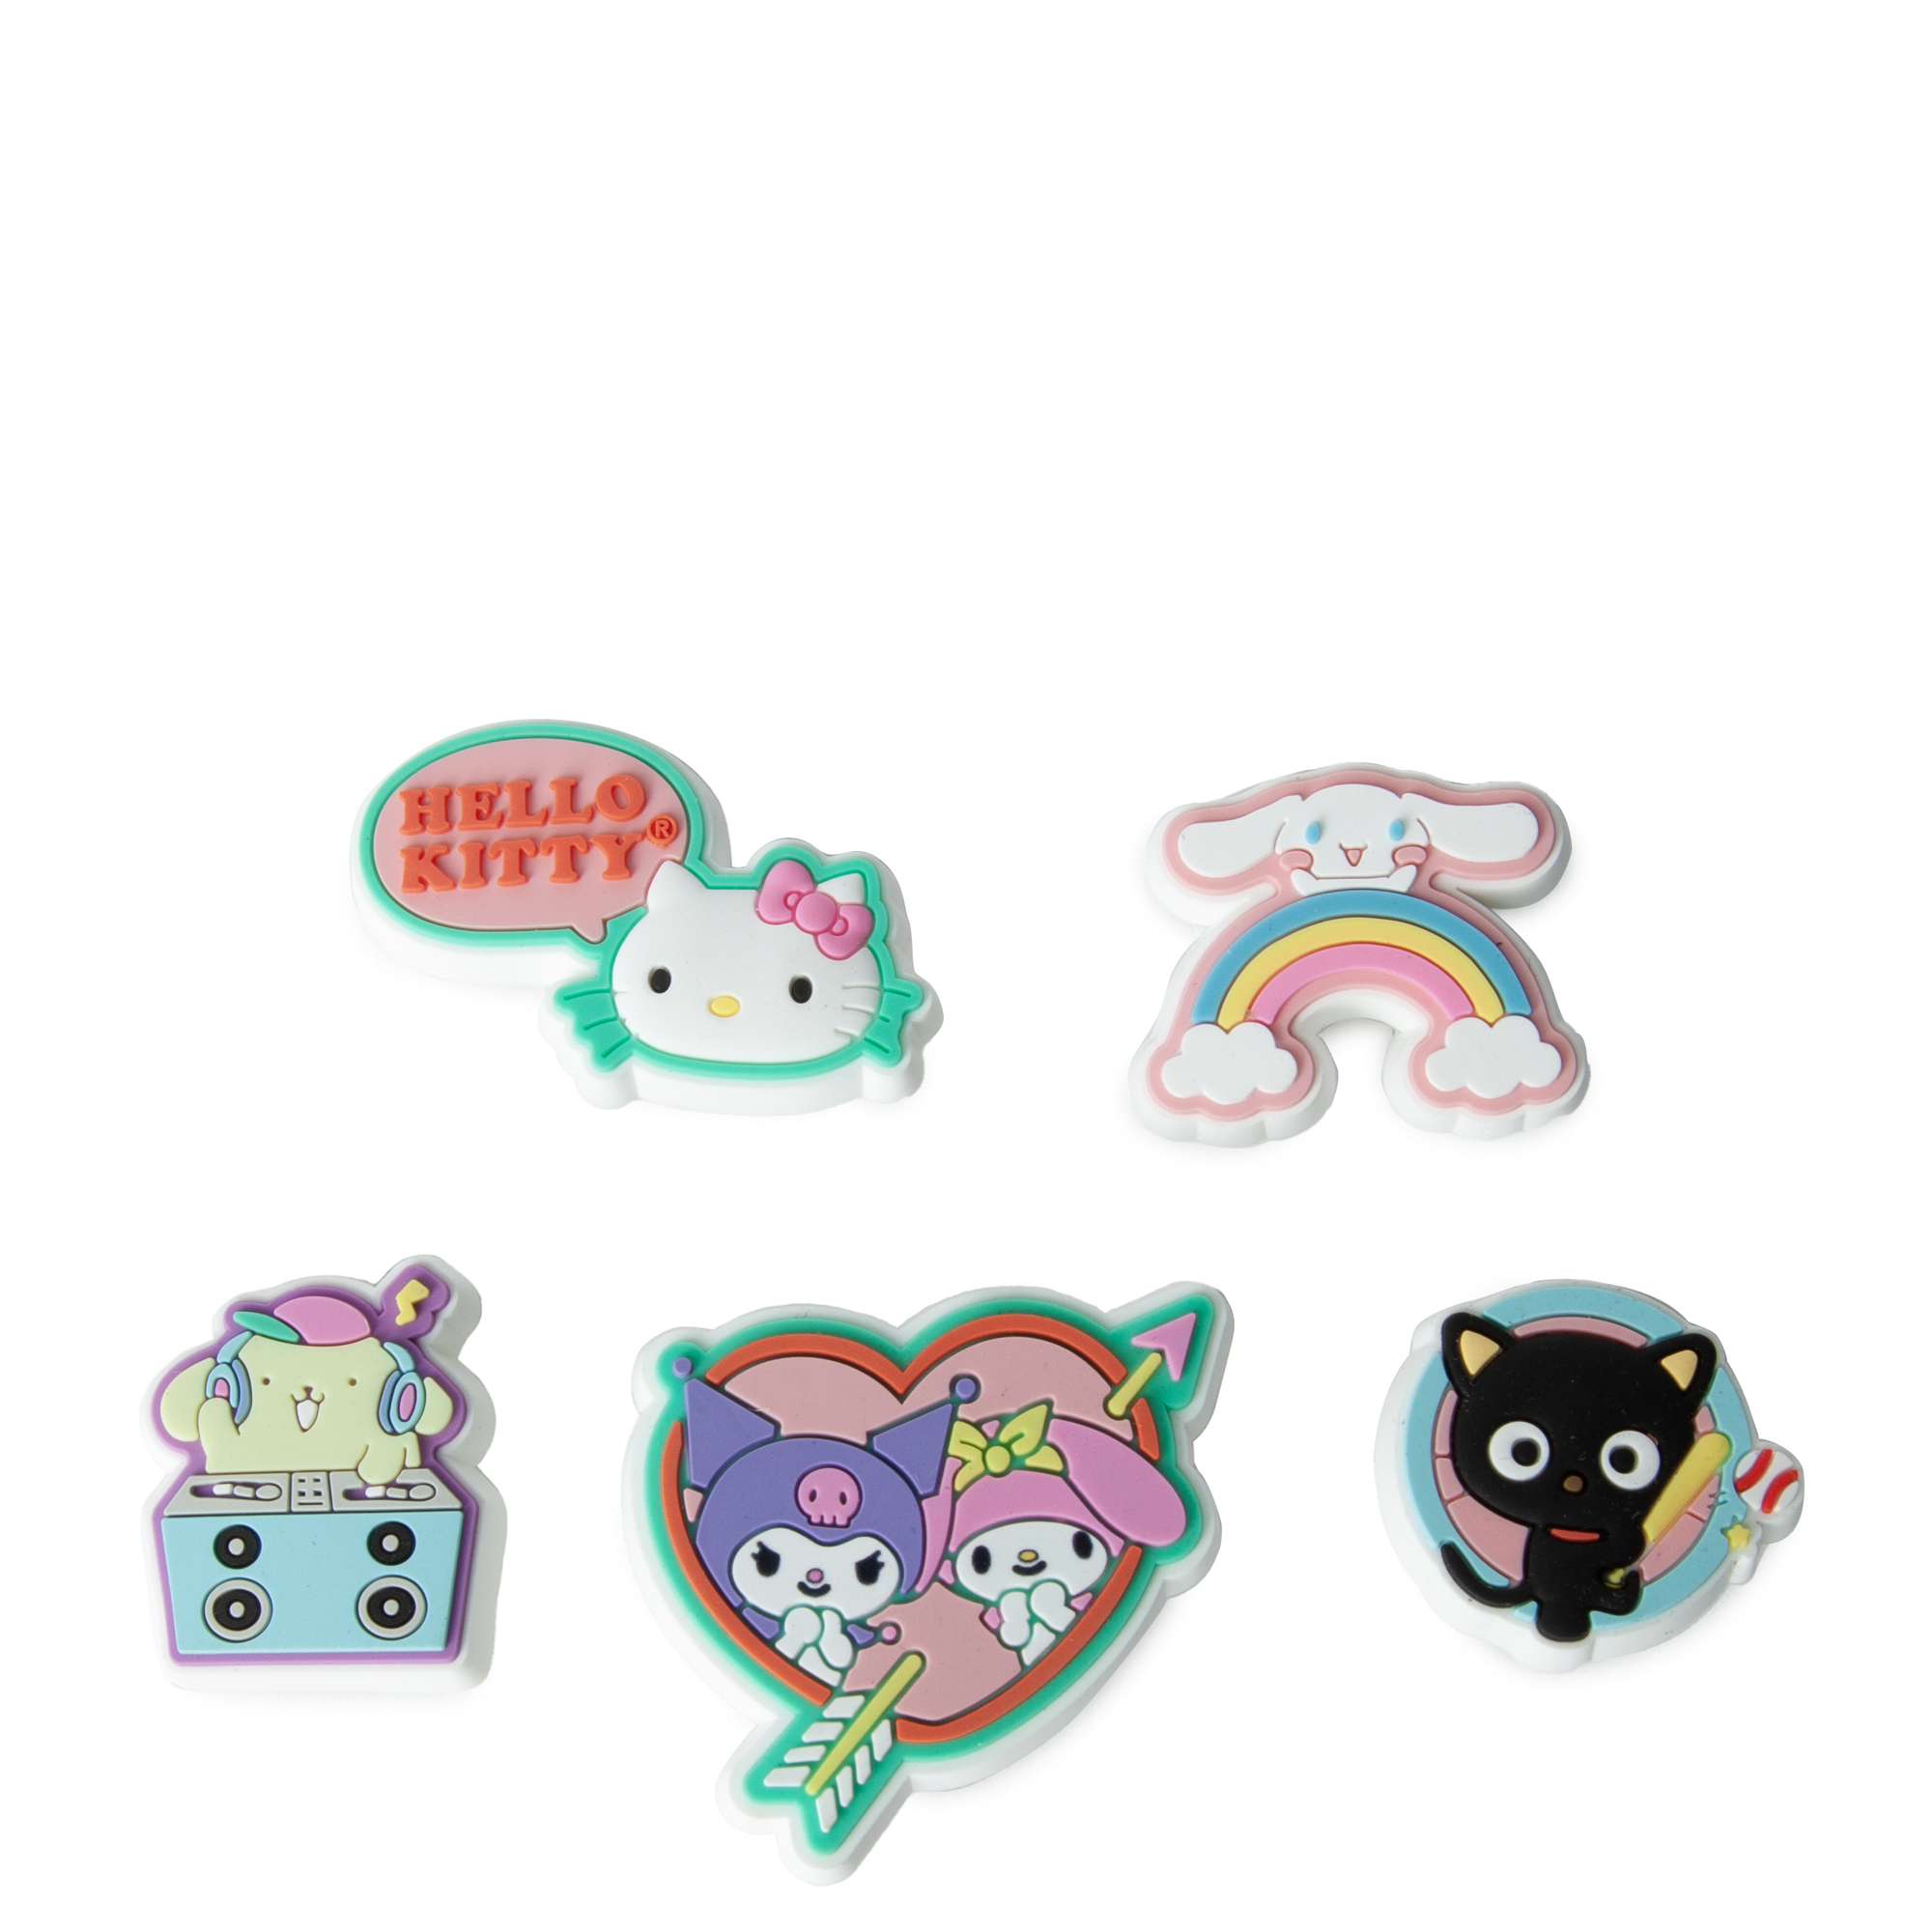 Genuine CROCS Hello Kitty Jibbitz Charms 5pcs Pack #10010556